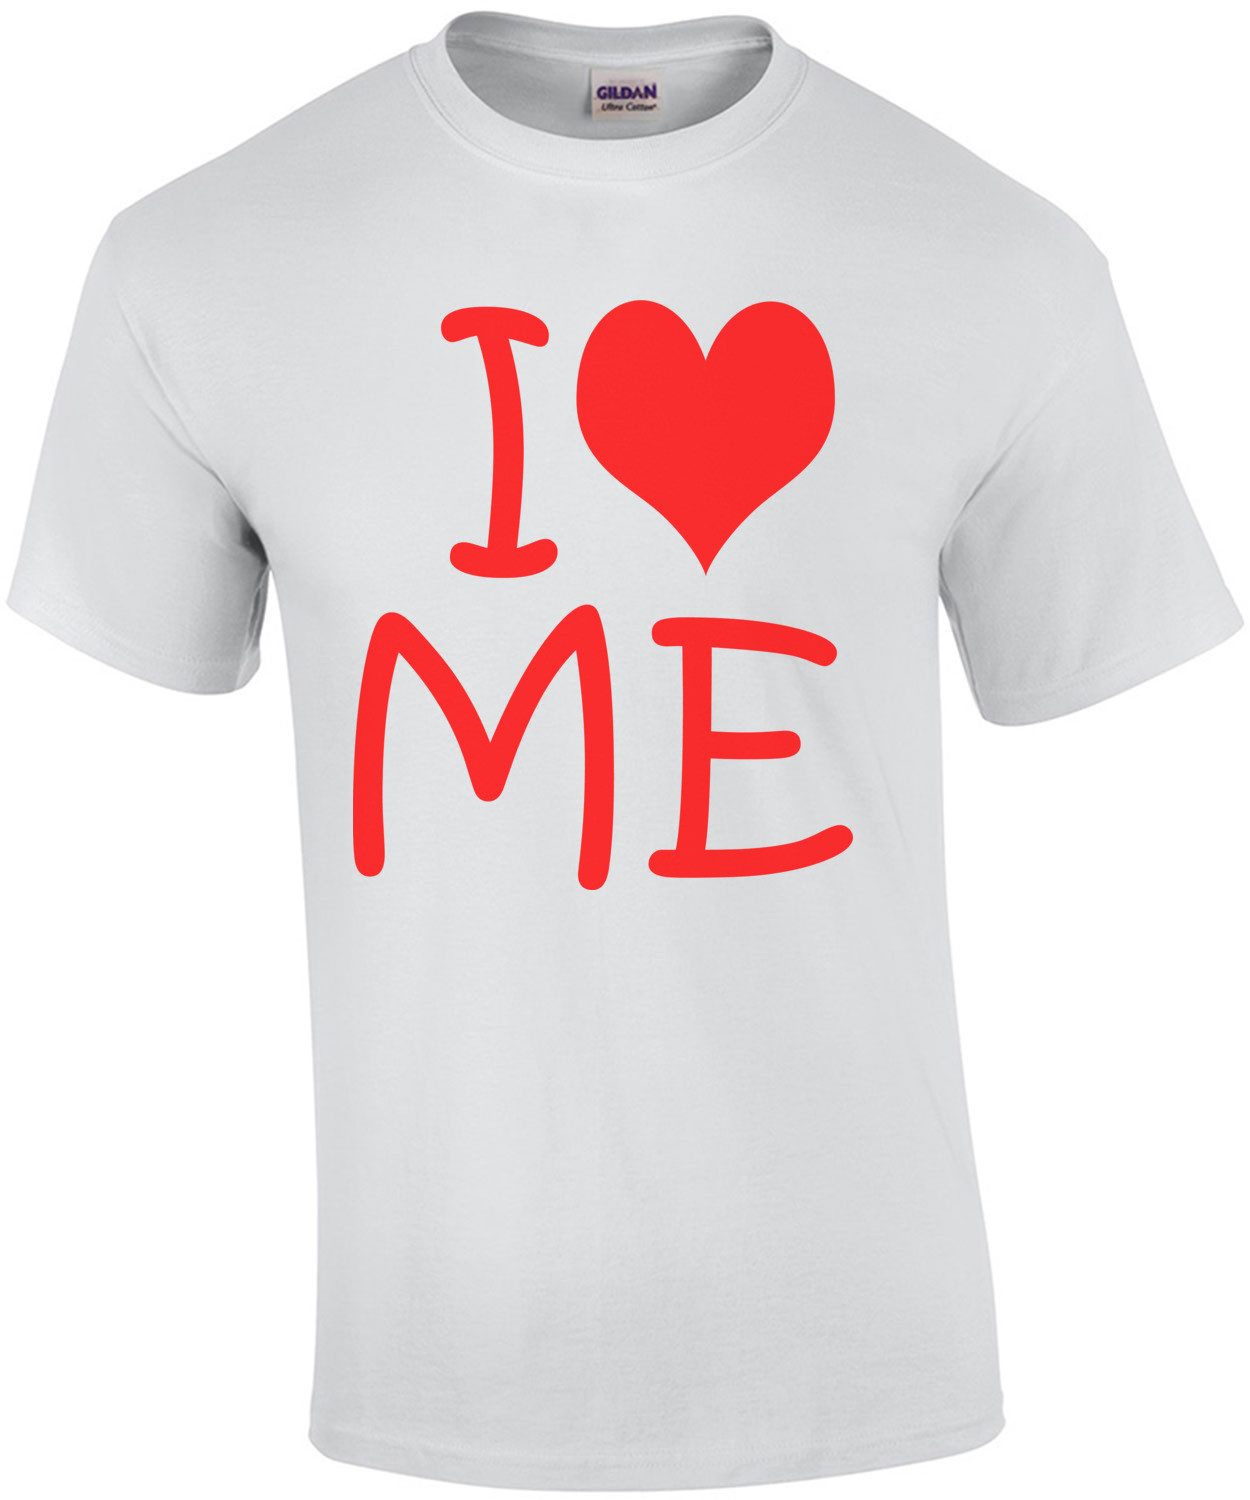 I Love Me Valentine's Shirt